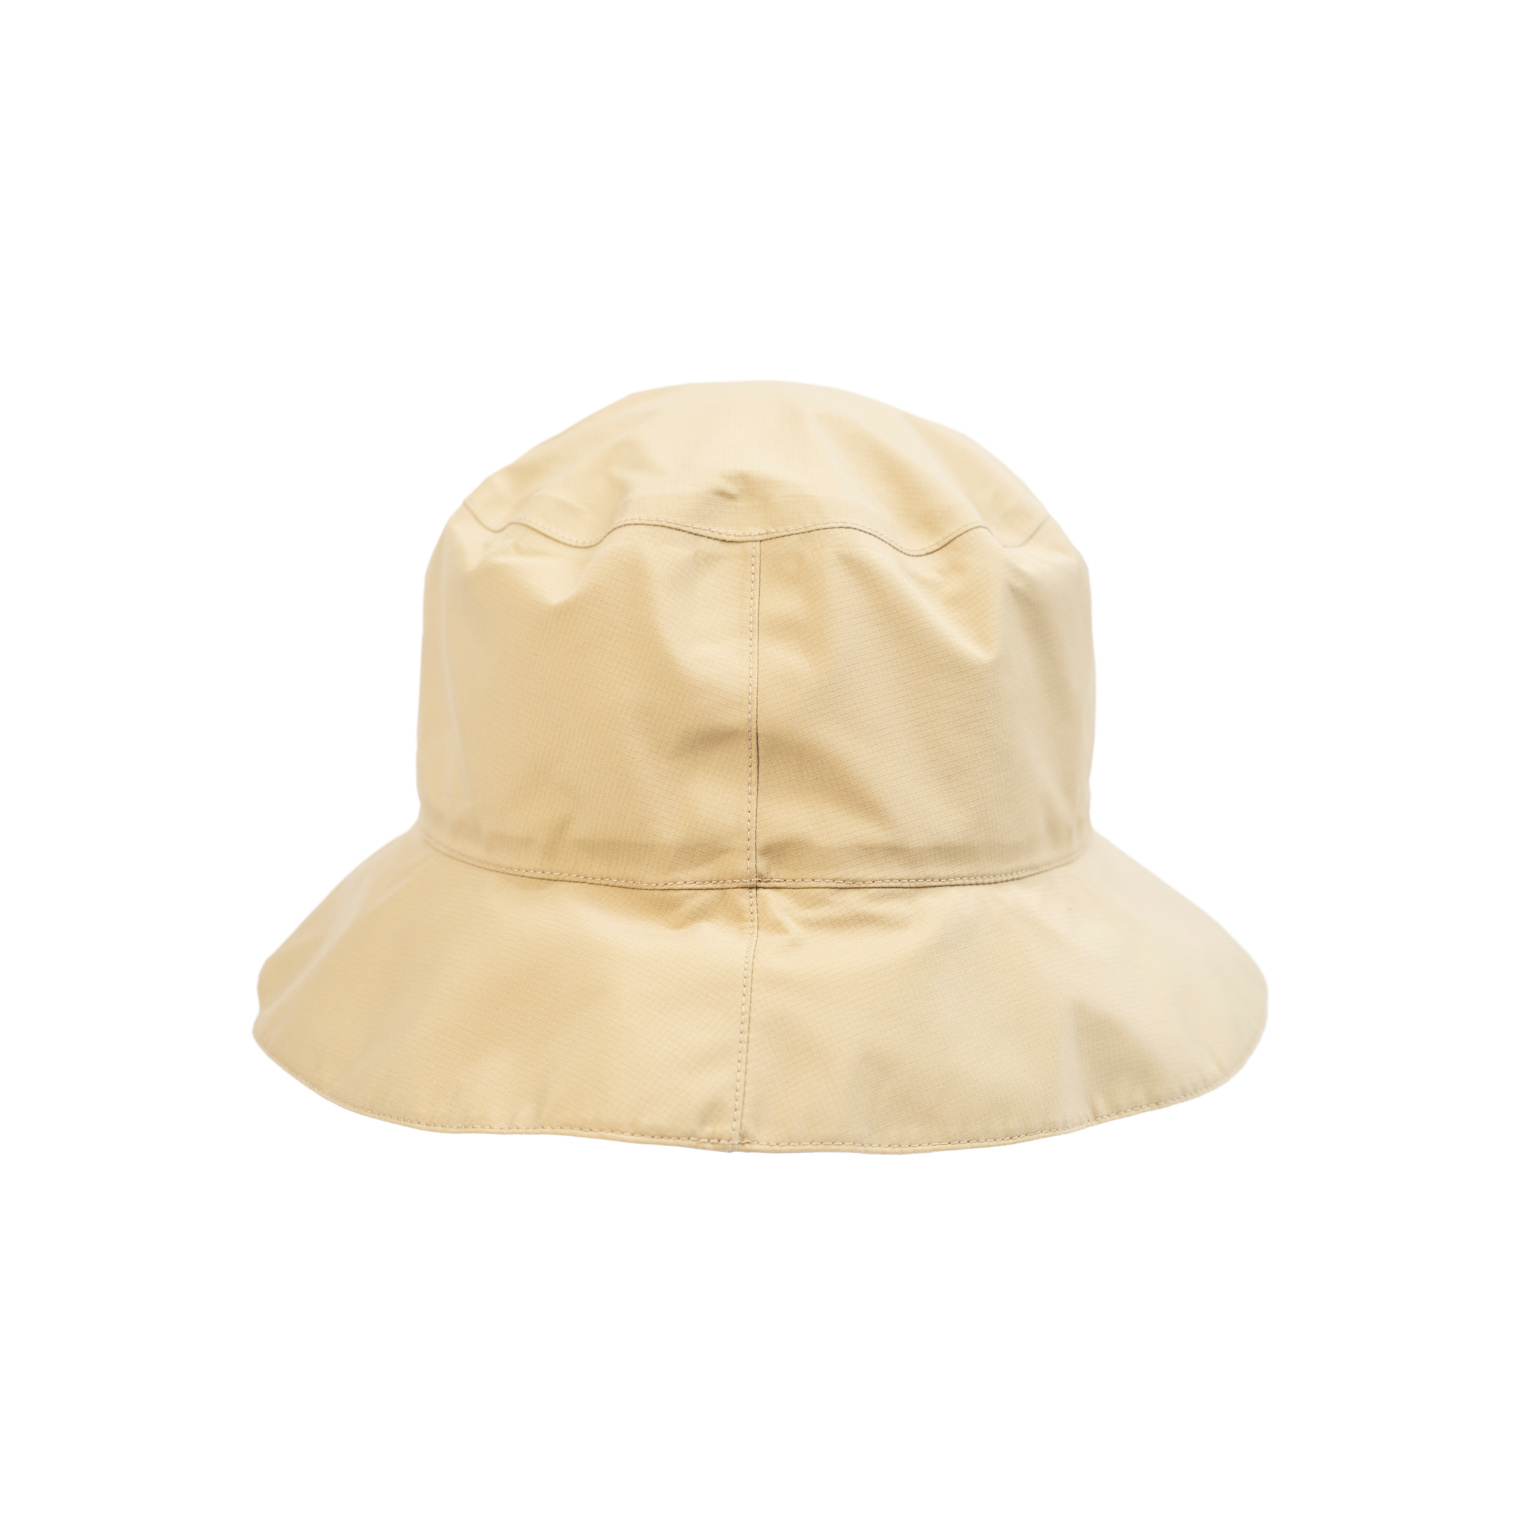 Acronym 3L waterproof bucket hat